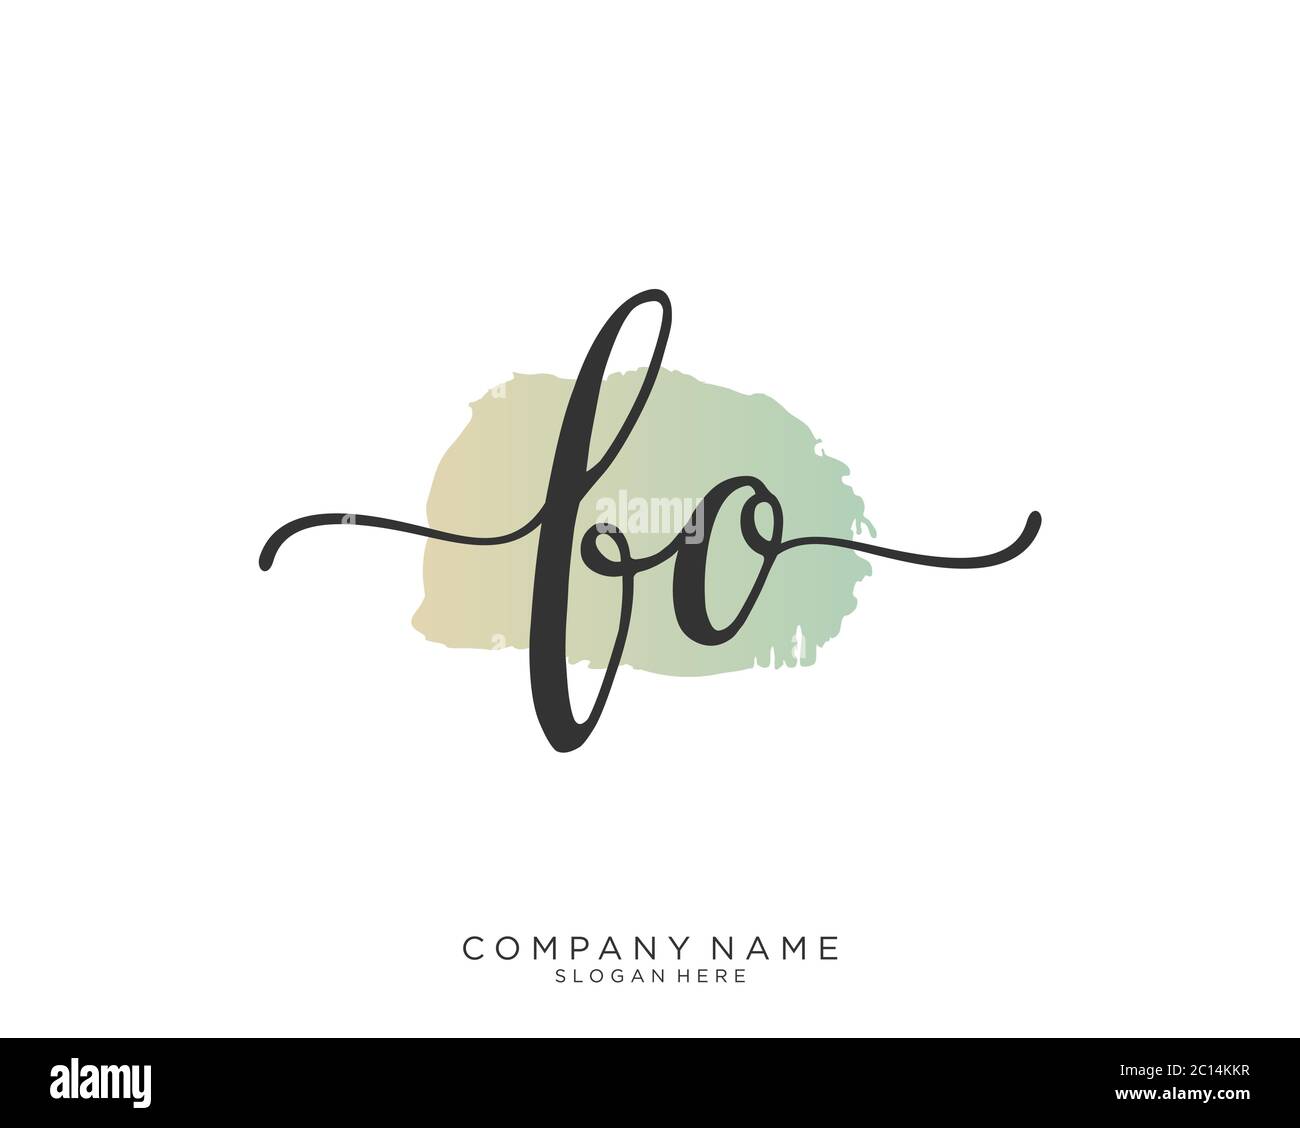 FO Initial handwriting logo vector Stock Vector